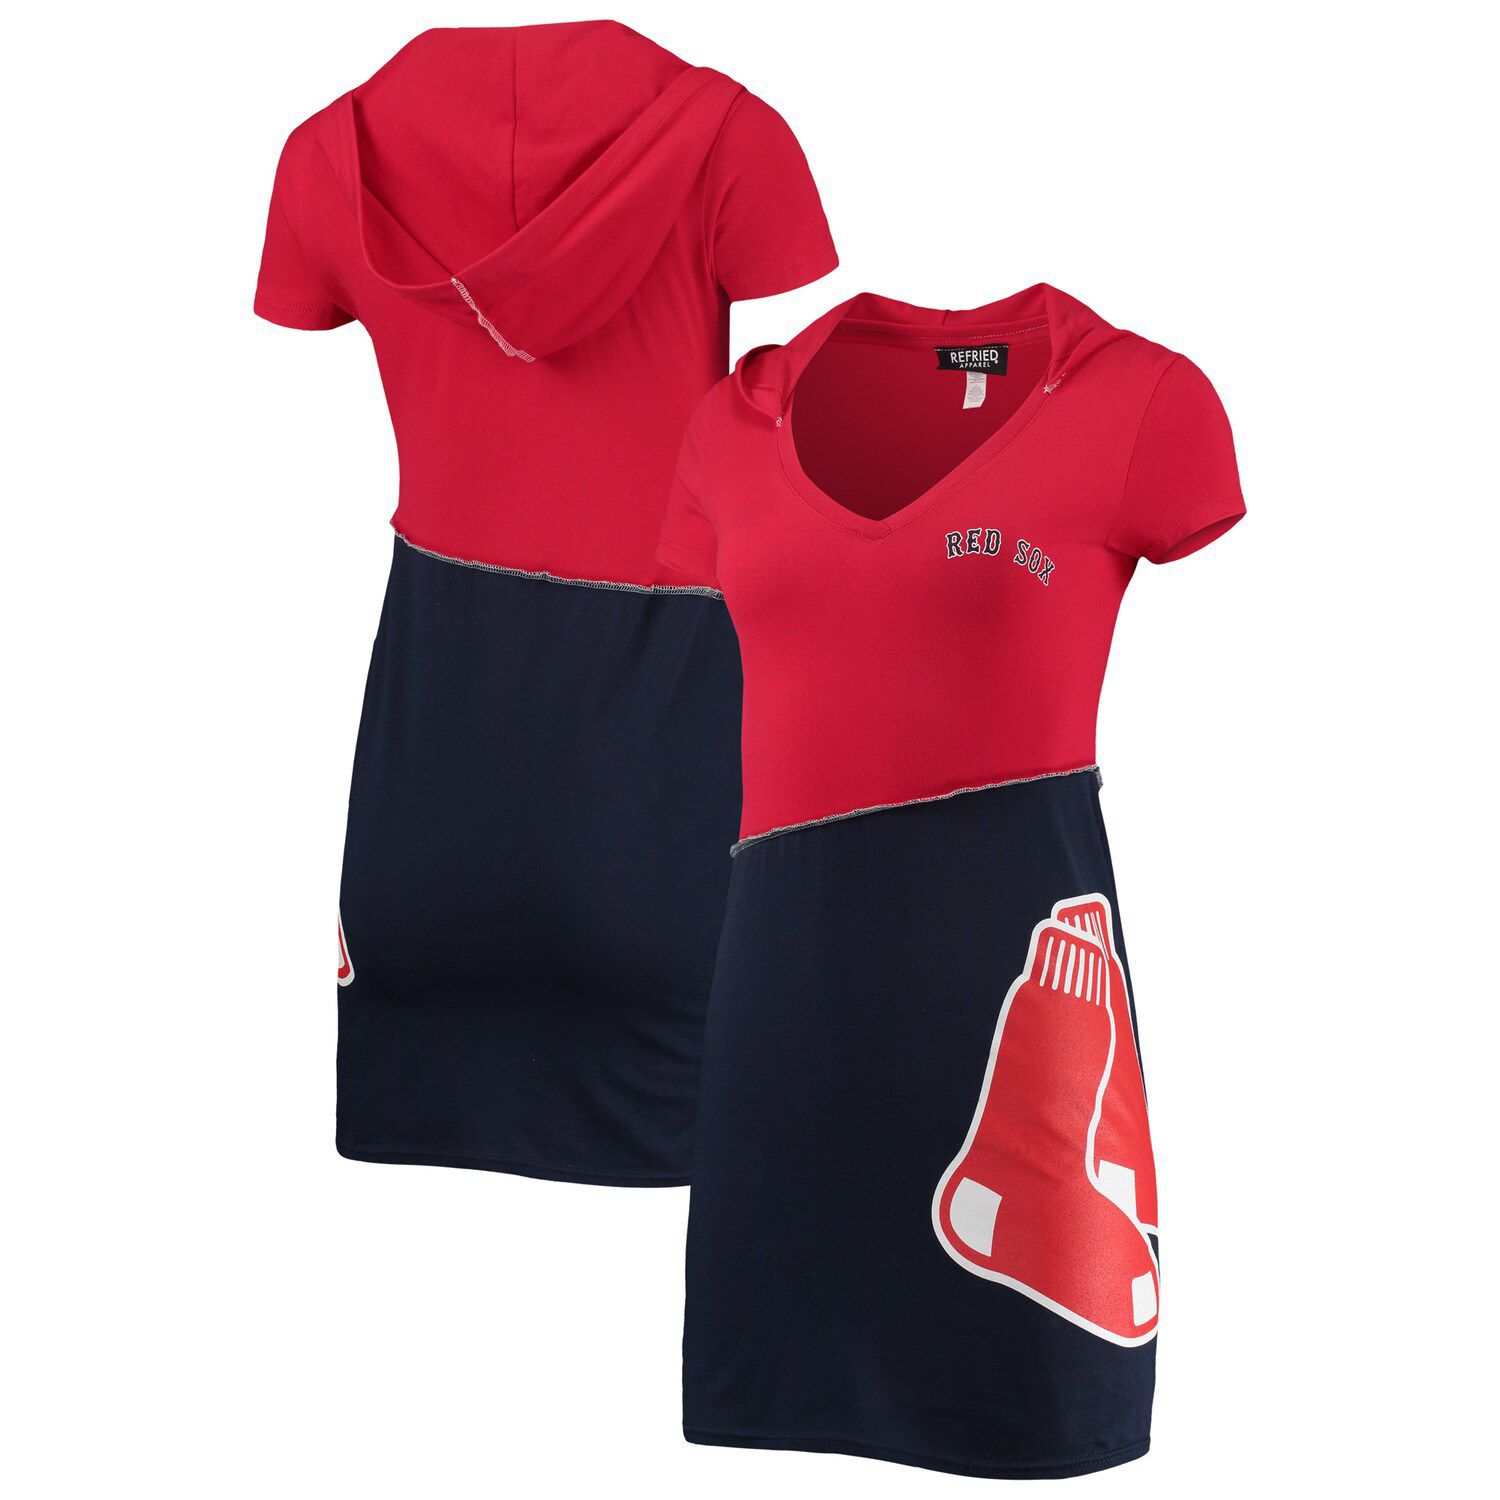 Women's Refried Apparel Scarlet San Francisco 49ers Tri-Blend Sleeveless  Maxi Dress